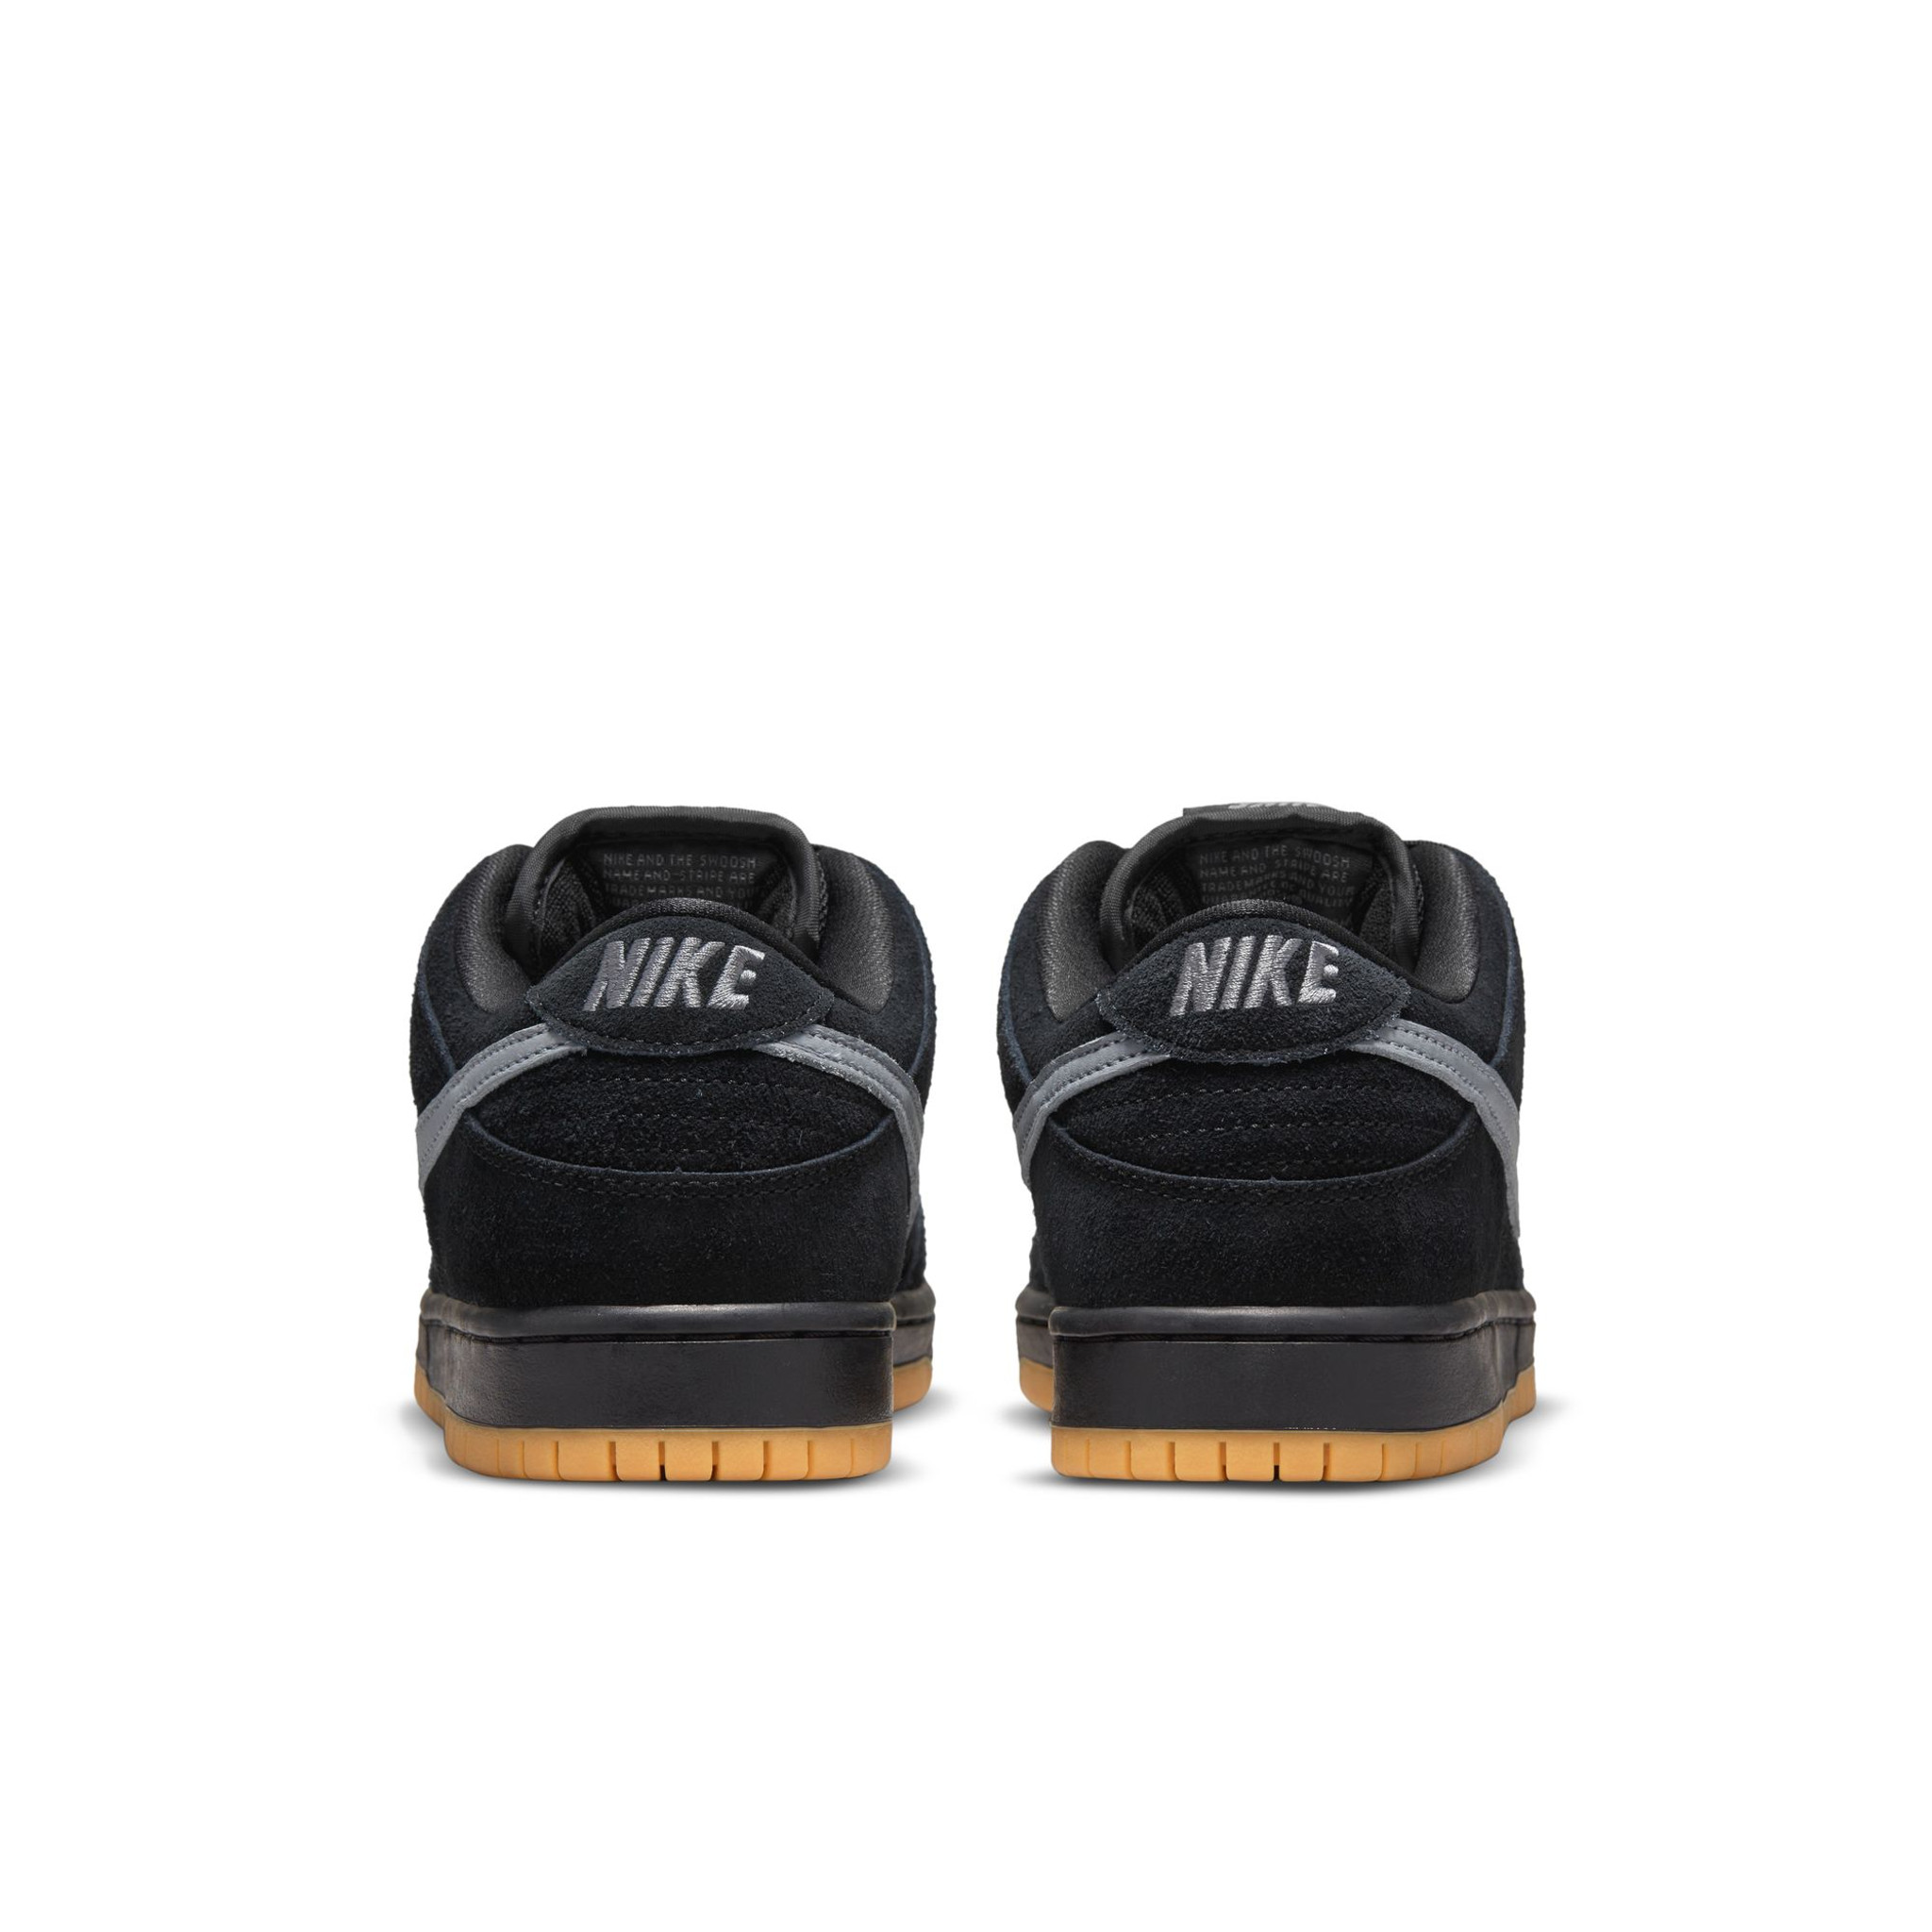 NIKE SB DUNK LOW PRO BLACK/COOL GREY-BLACK-BLACK Skate Shoes